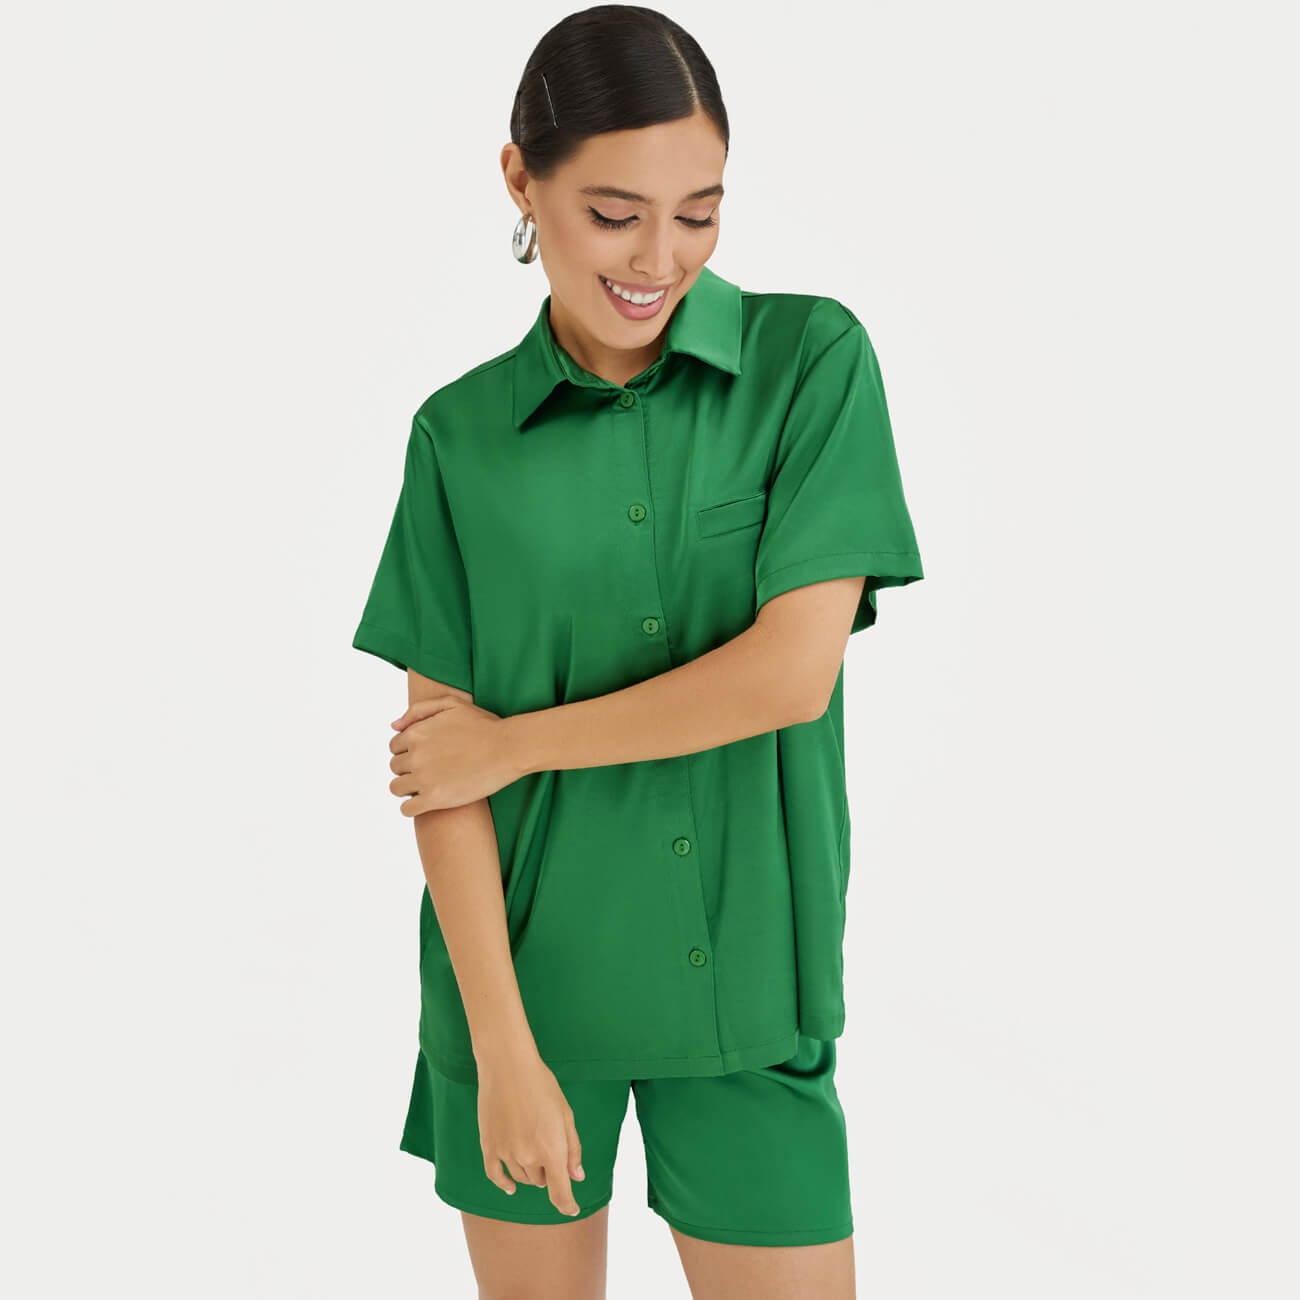 Рубашка женская, р. XL, с коротким рукавом, полиэстер/эластан, зеленая, Madeline рубашка женская р m удлиненная с длинным рукавом полиэстер эластан зеленая madeline